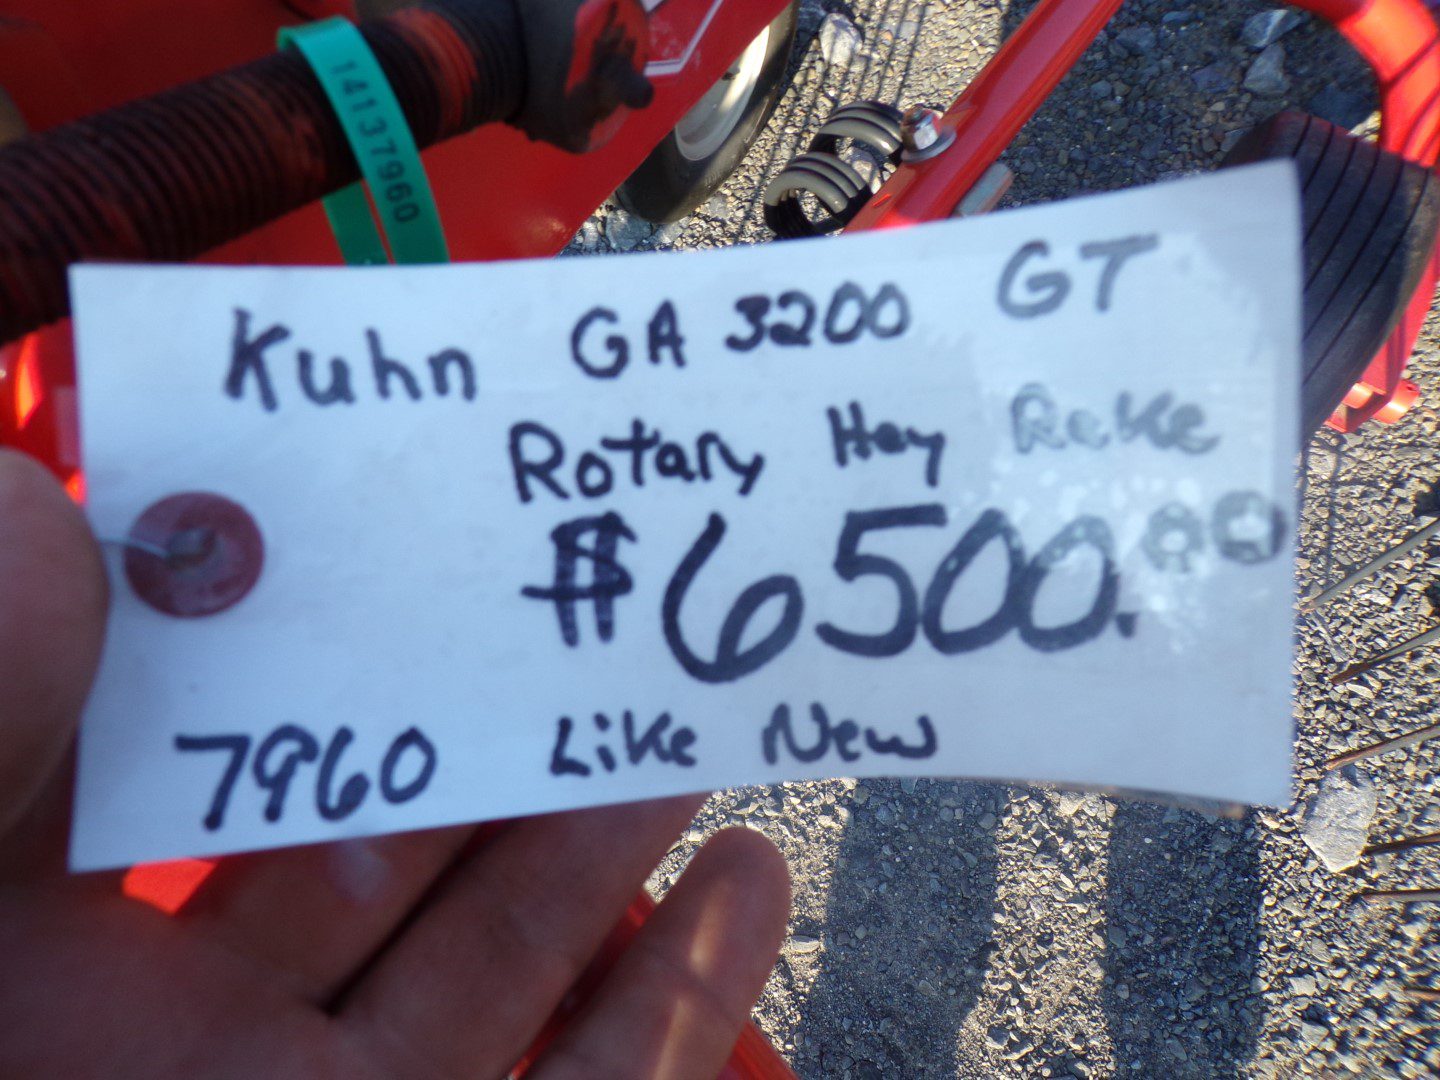 7960 Kuhn GA3200GT Hay Rake $6500.00